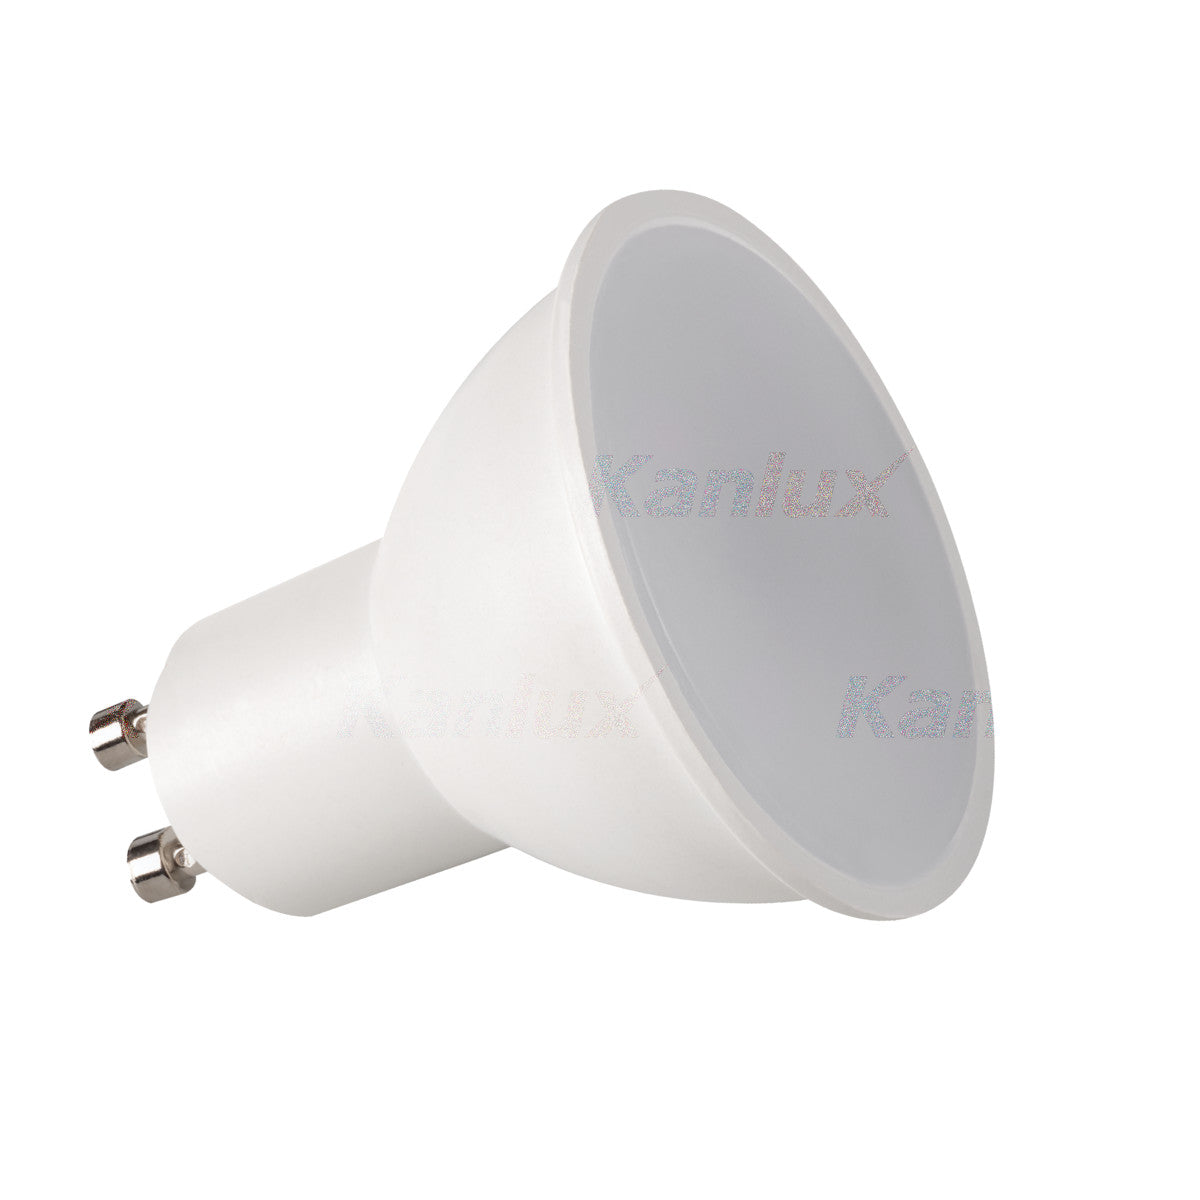 Kanlux 8W GU10 LED Warm Cool White Light Bulb Energy Saving Lamp